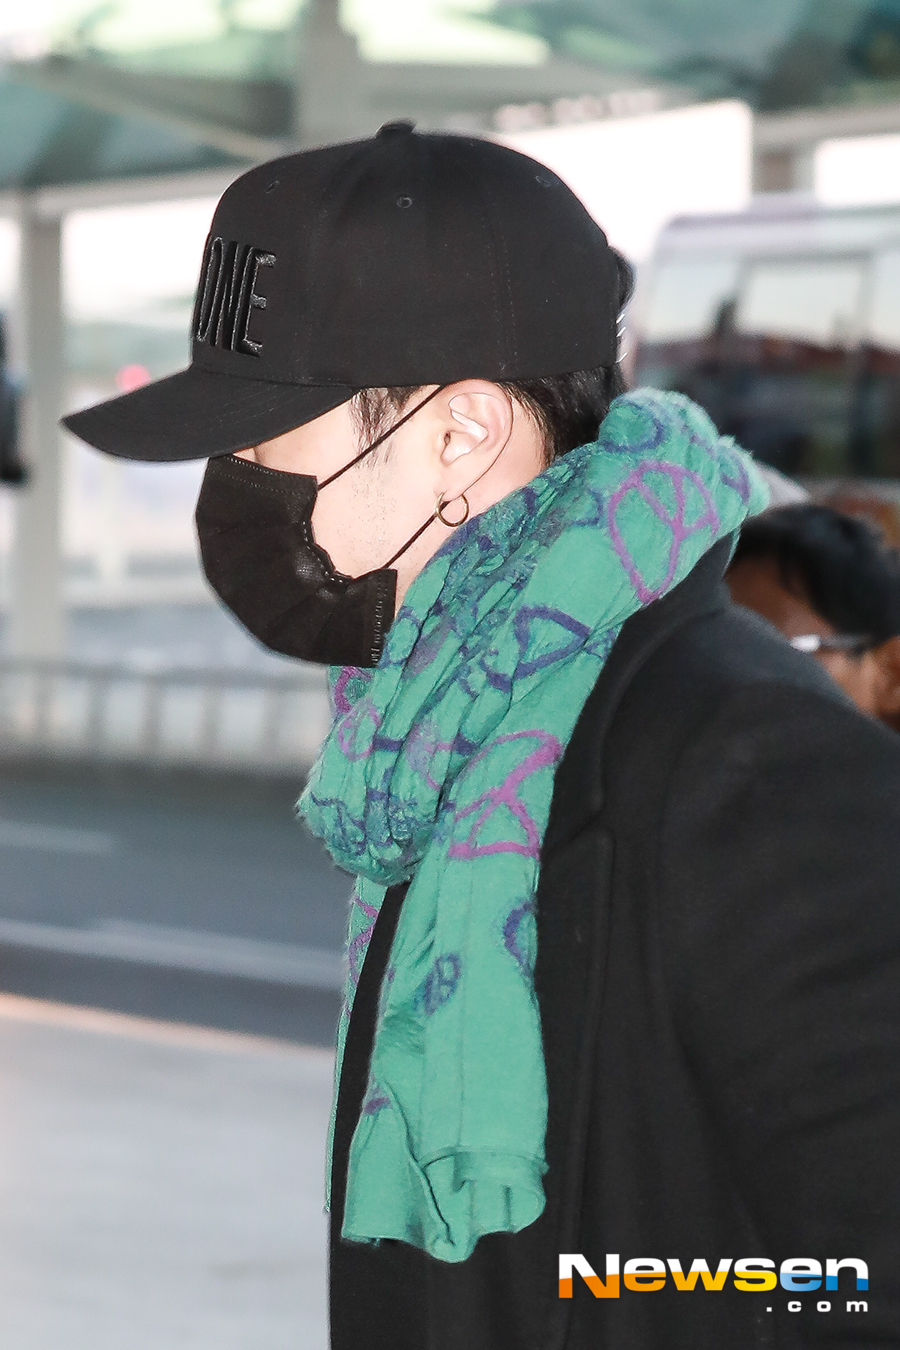 Actor So Ji-sub departed from Incheon International Airport on February 9th, after a schedule overseas for the 2019 So Ji-sub Asian fan meeting tour Hello in Taipei, Taiwan.#So Ji-sub #SoJisub #Incheon Airport #Airport Fashionkim ki-tae